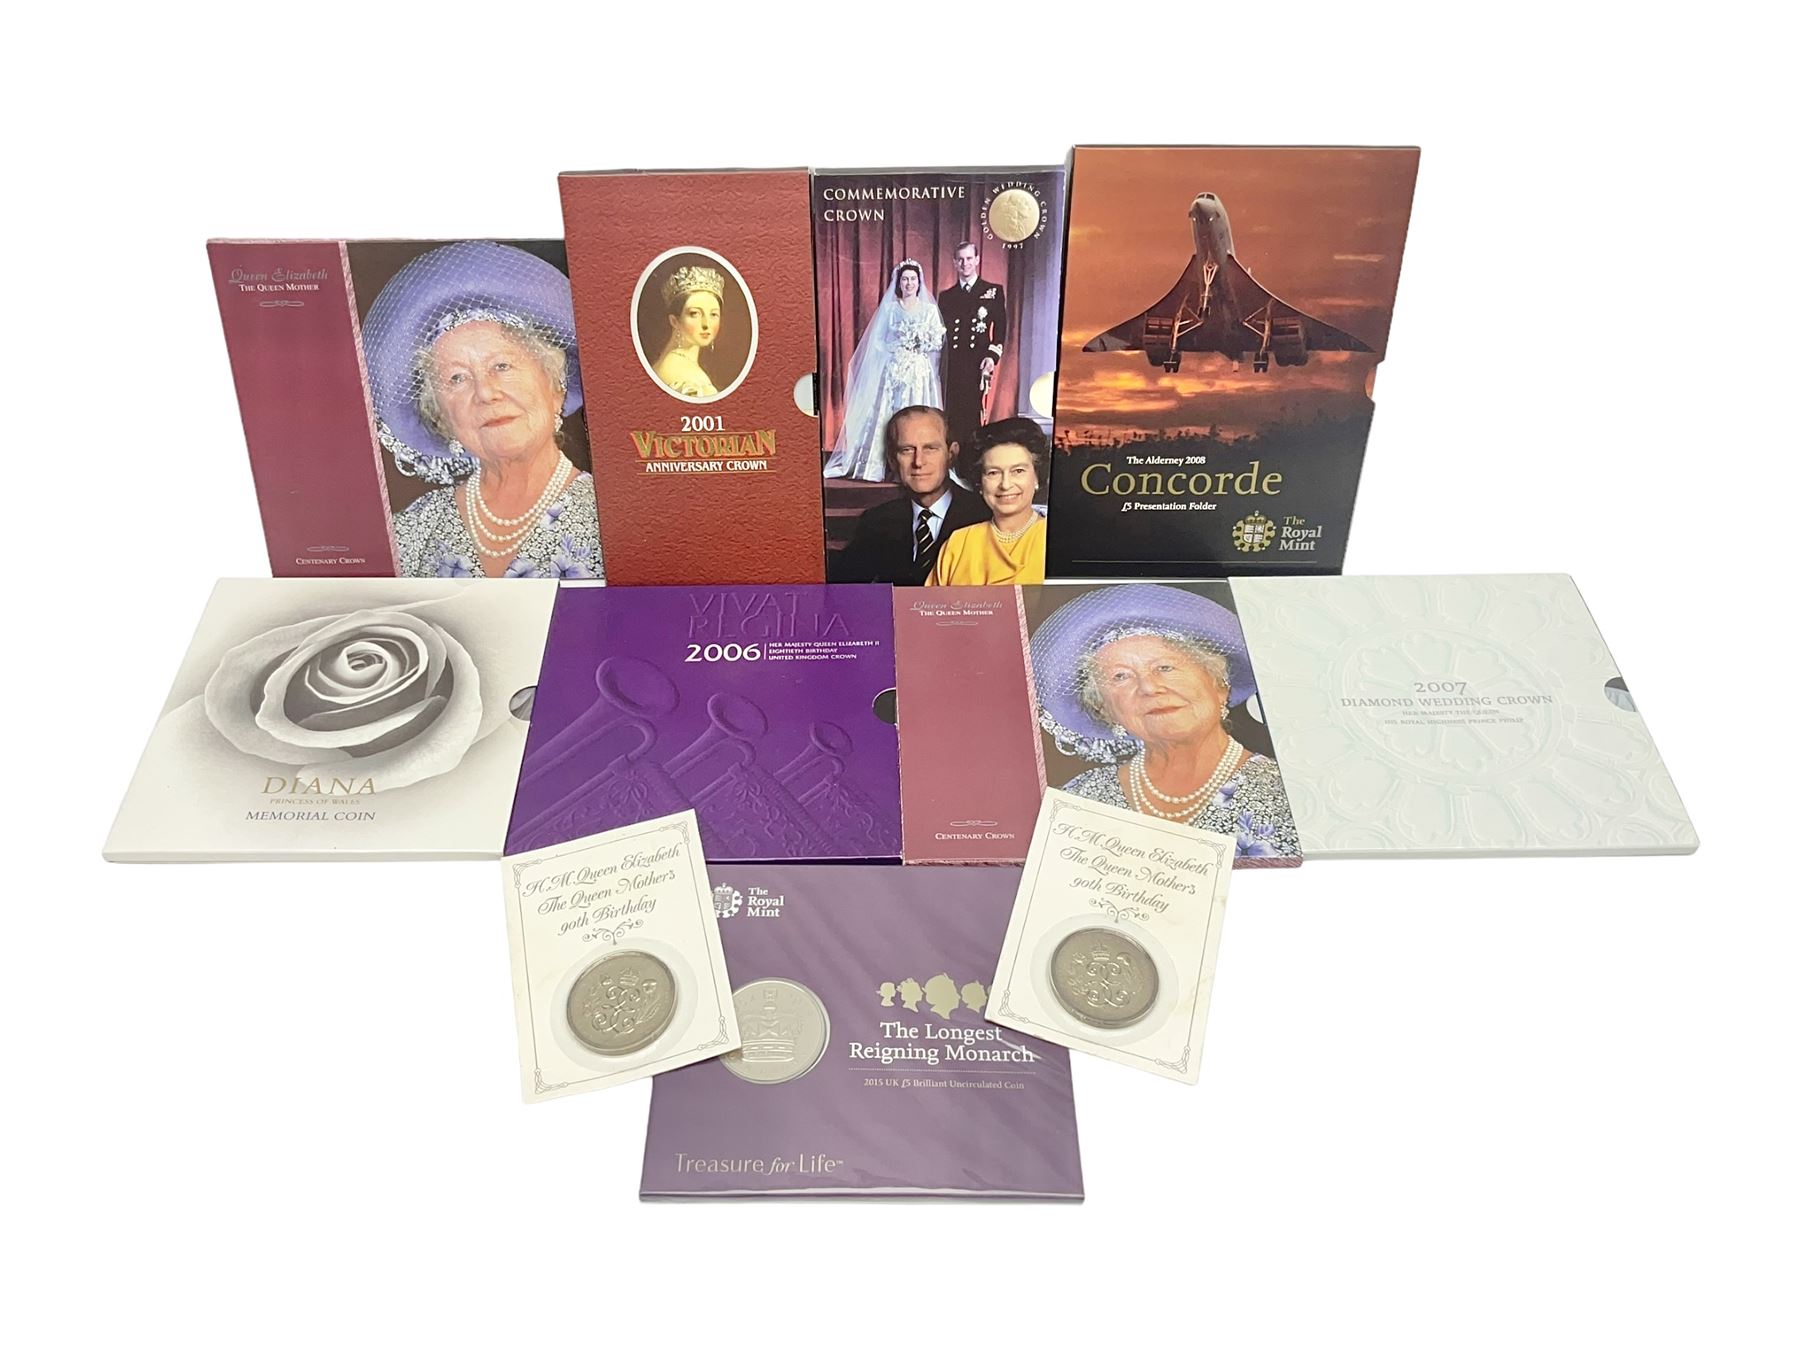 Eleven Queen Elizabeth II cupronickel five pound coins